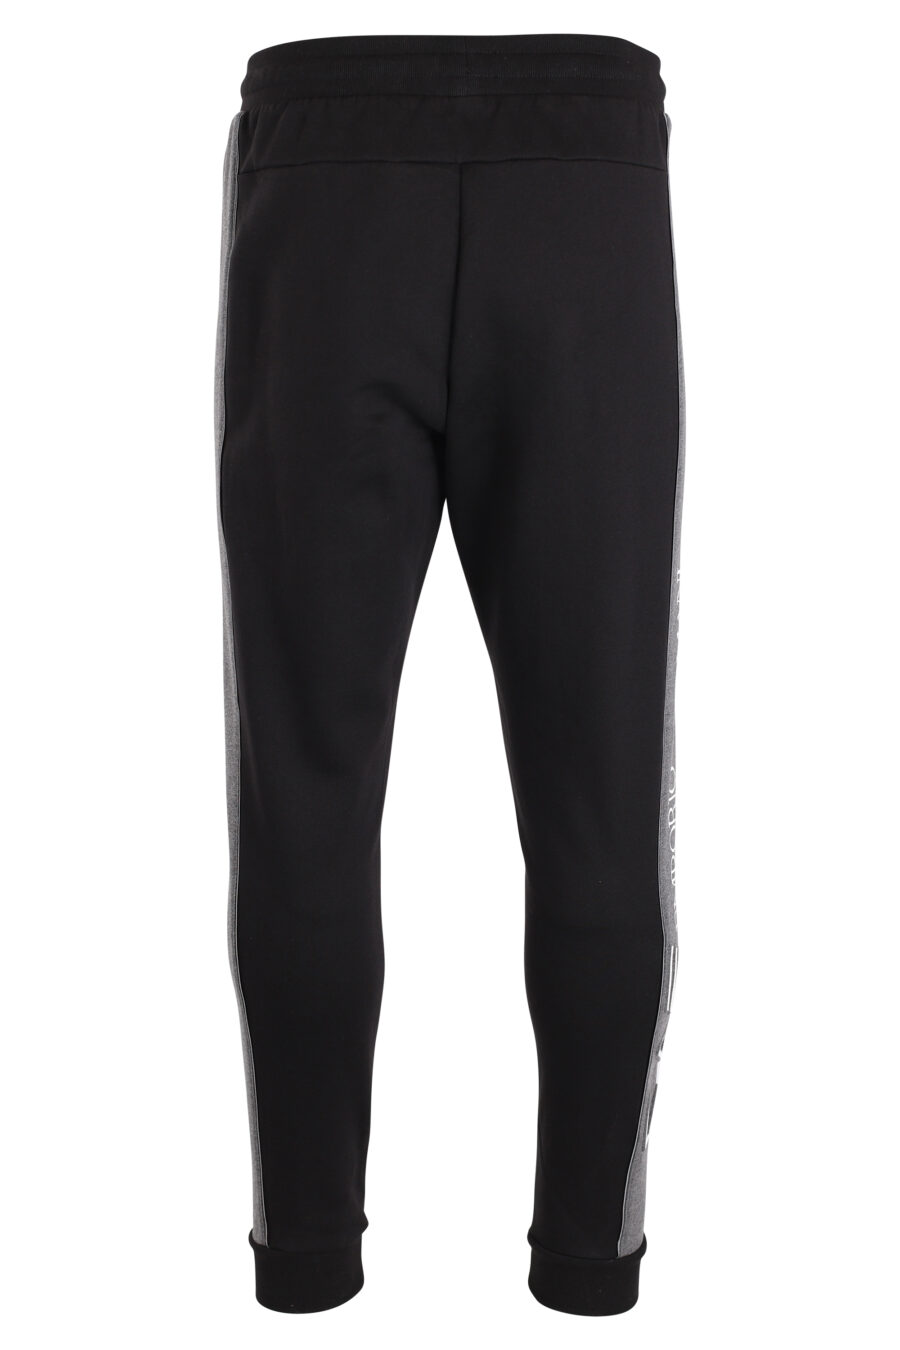 Pantalón de chándal negro con franjas grises y logo lateral "lux identity" - IMG 4108